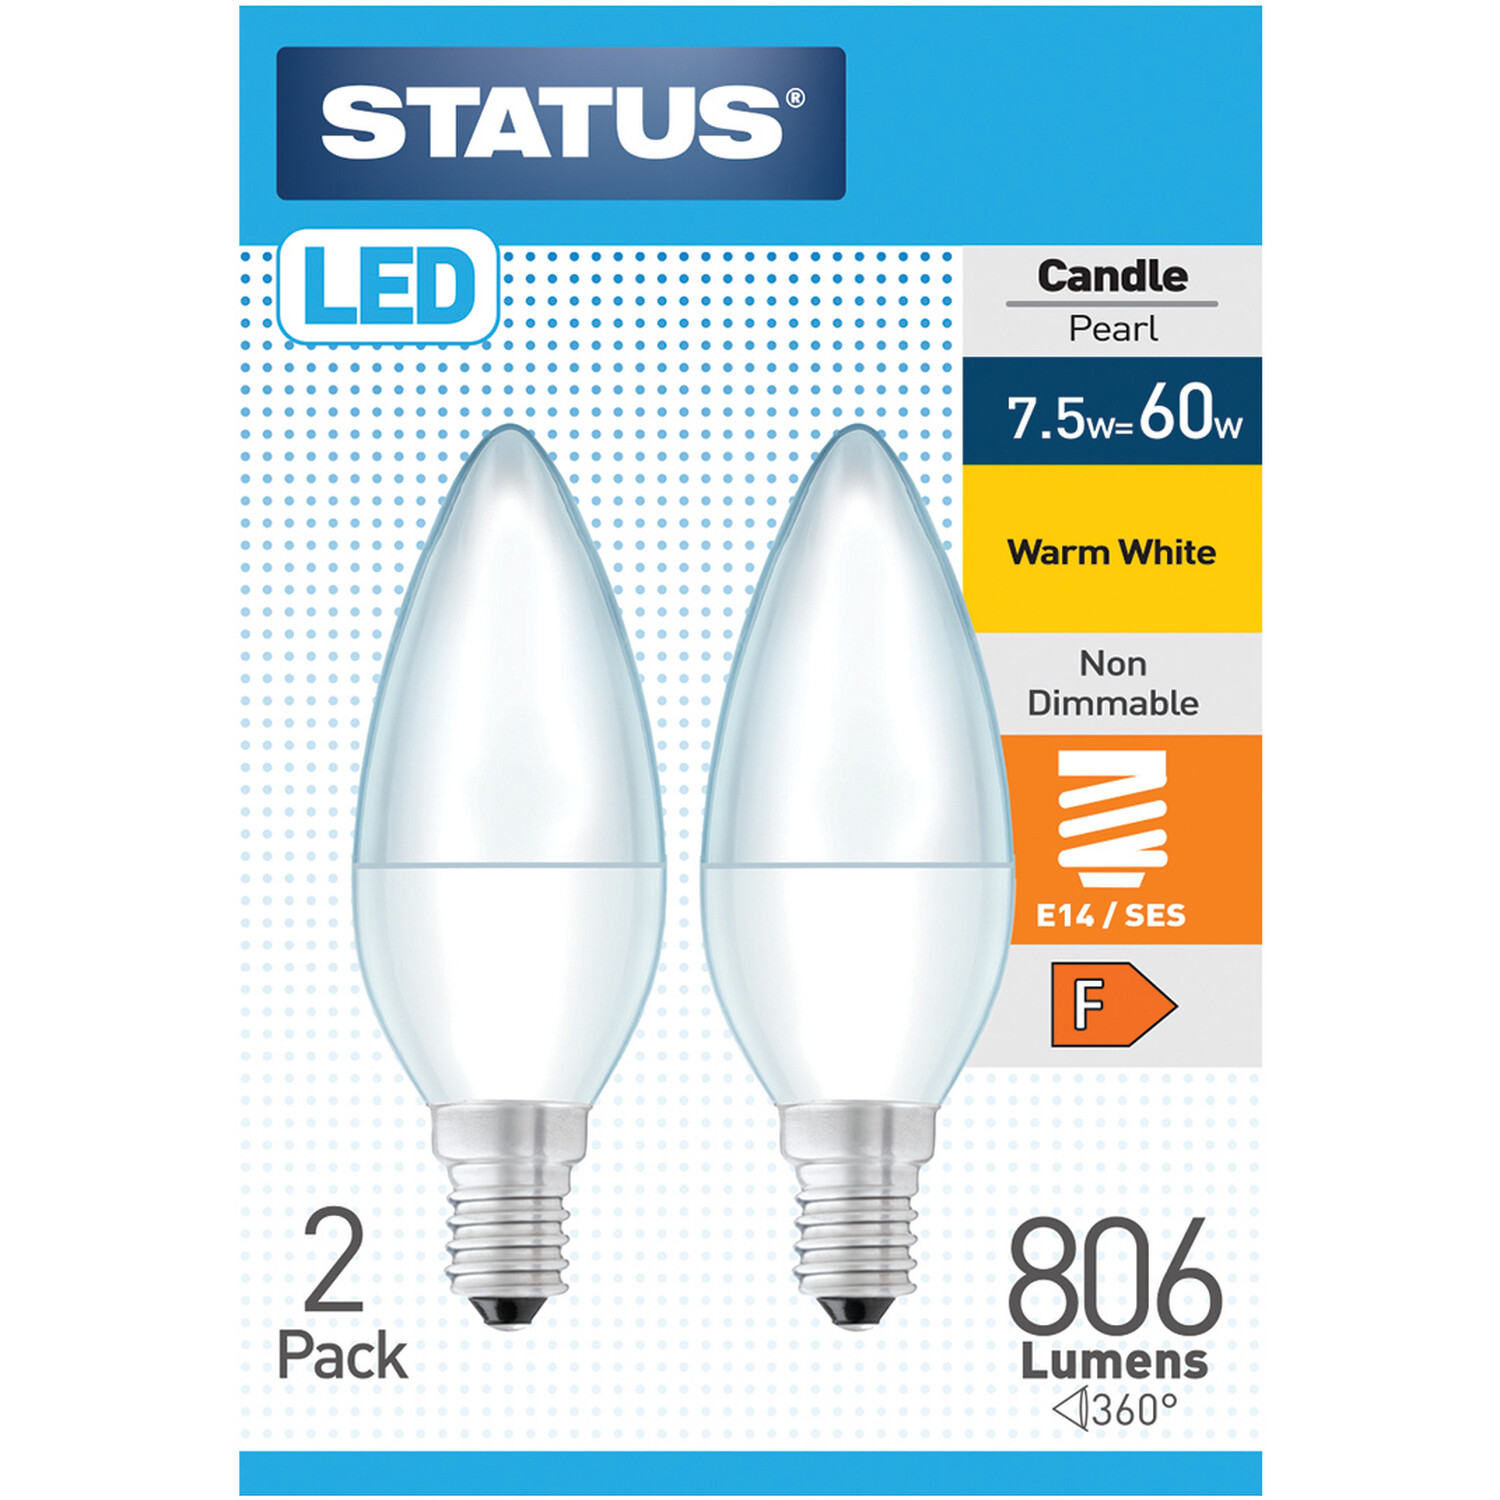 Status 2 Pack E14/SES LED 7.5W Candle Pearl Light Bulbs Image 1